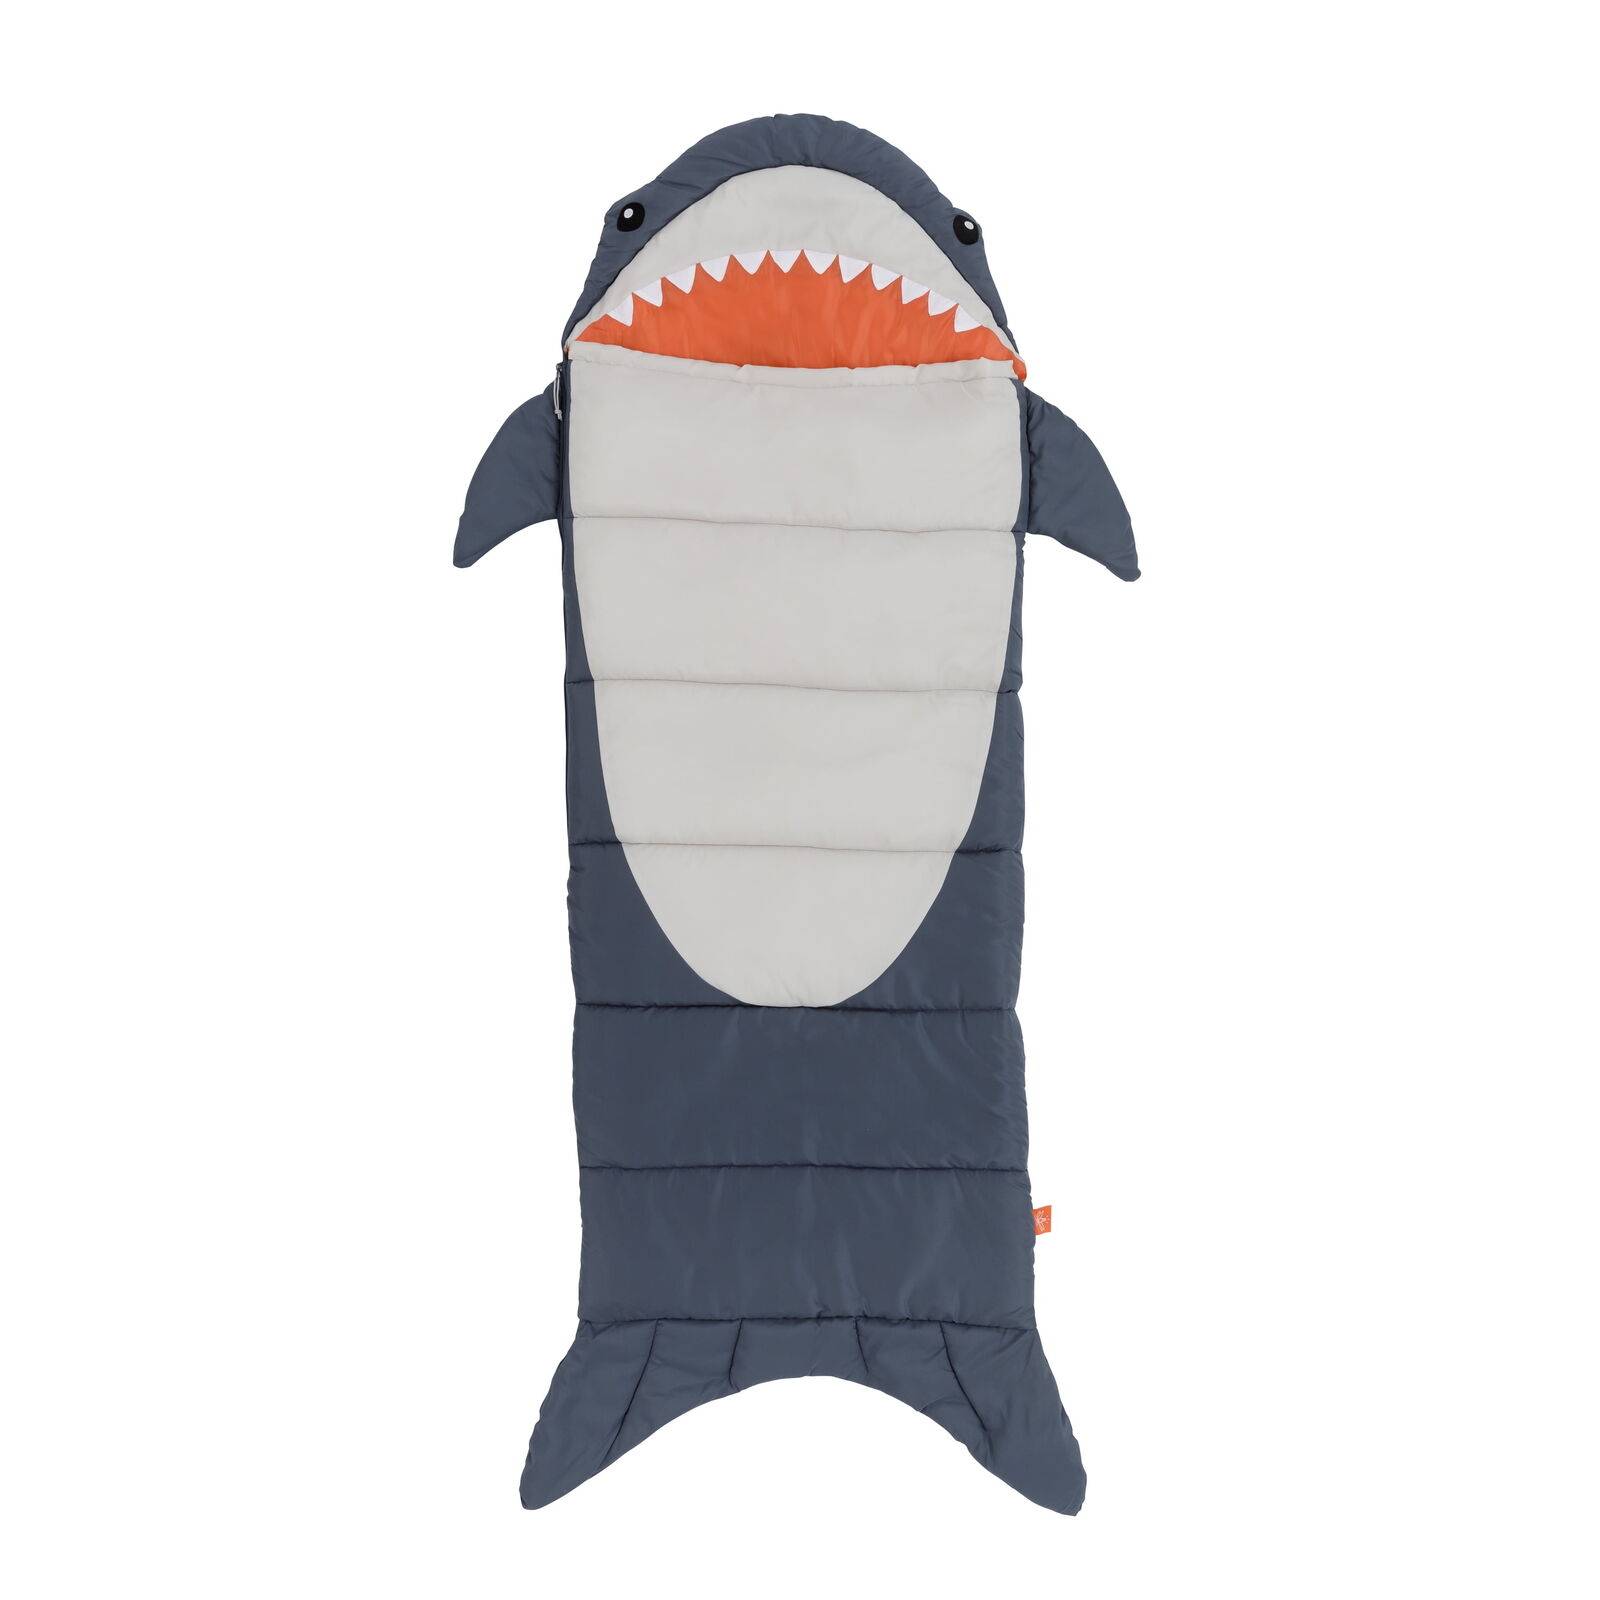 Finn the Shark Kid\'s Sleeping Bag - Navy/Gray (youth size 65 in. x 24 in.)